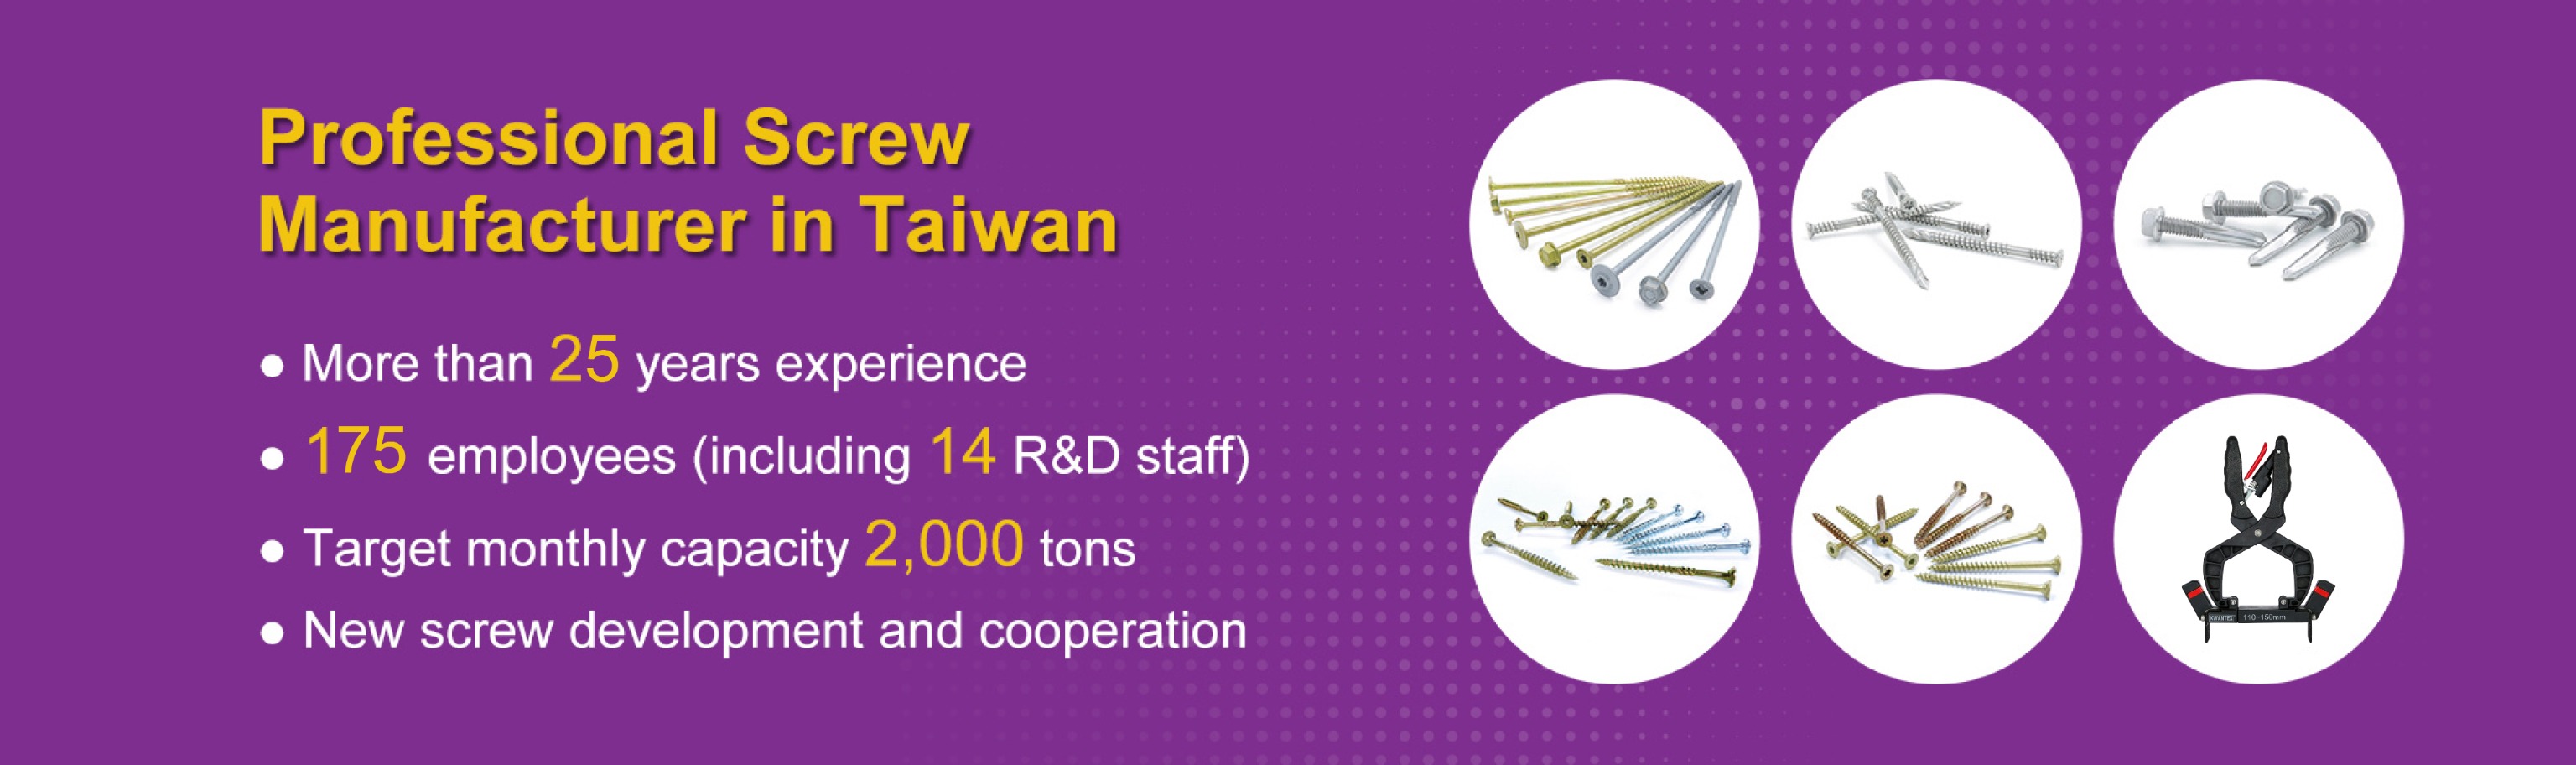 Professional screw manufacturer in taiwan